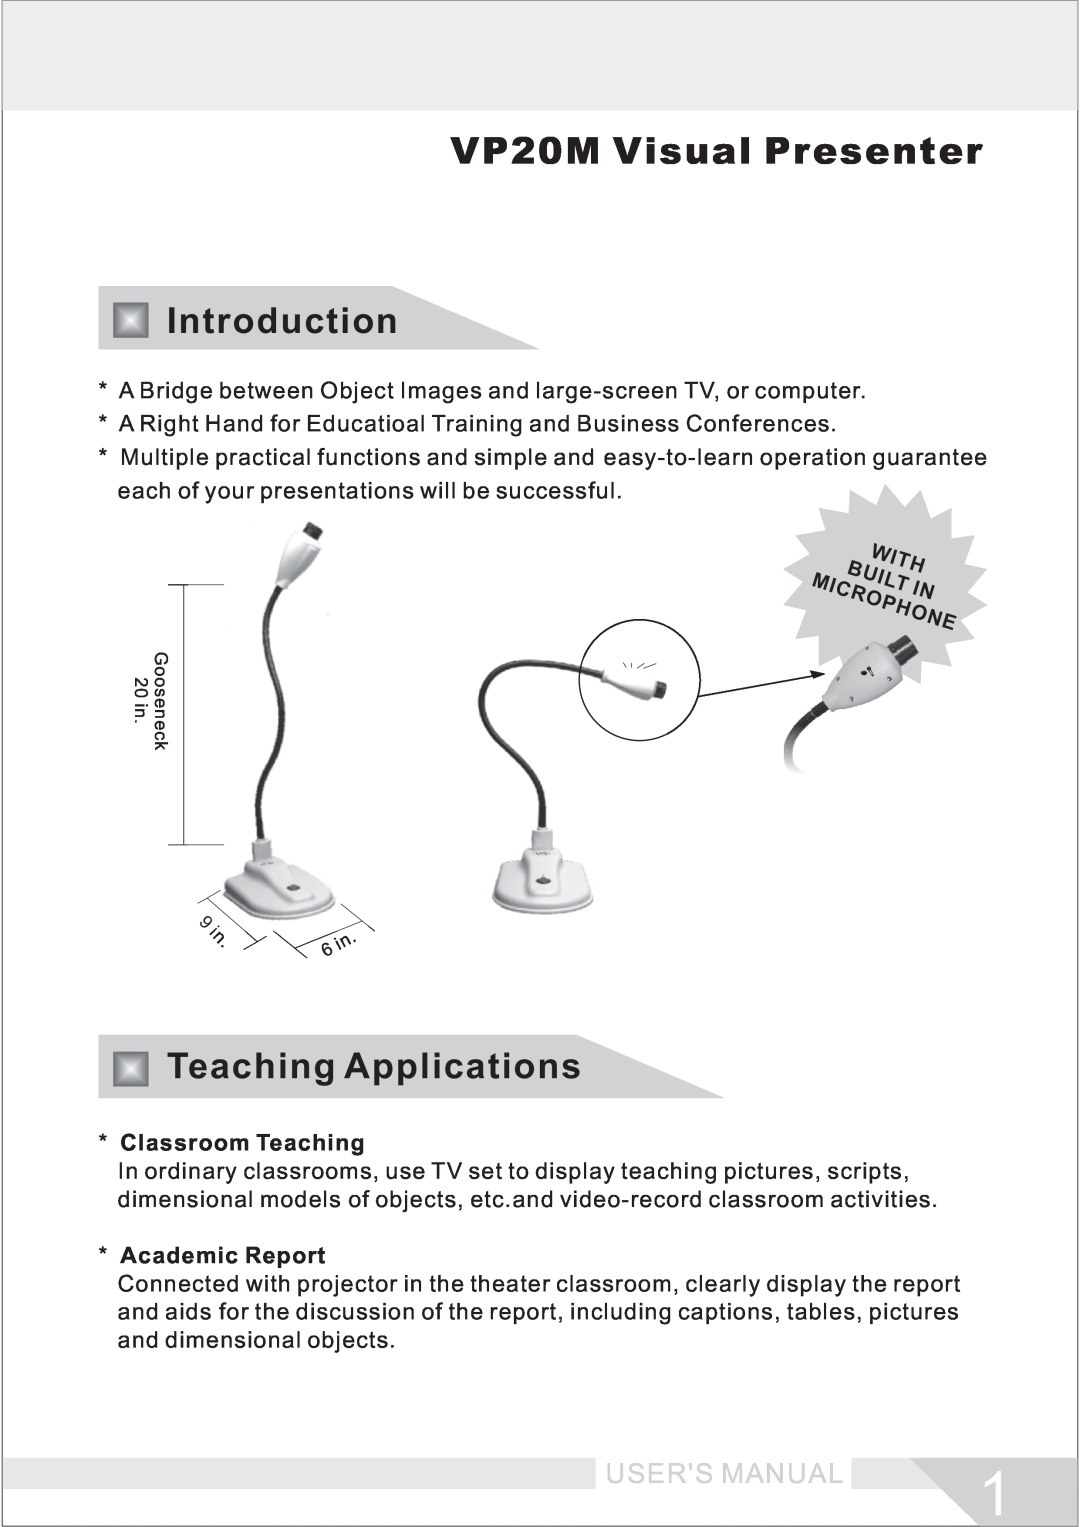 Buhl manual Introduction, Teaching Applications, Classroom Teaching, Academic Report, VP20M Visual Presenter 